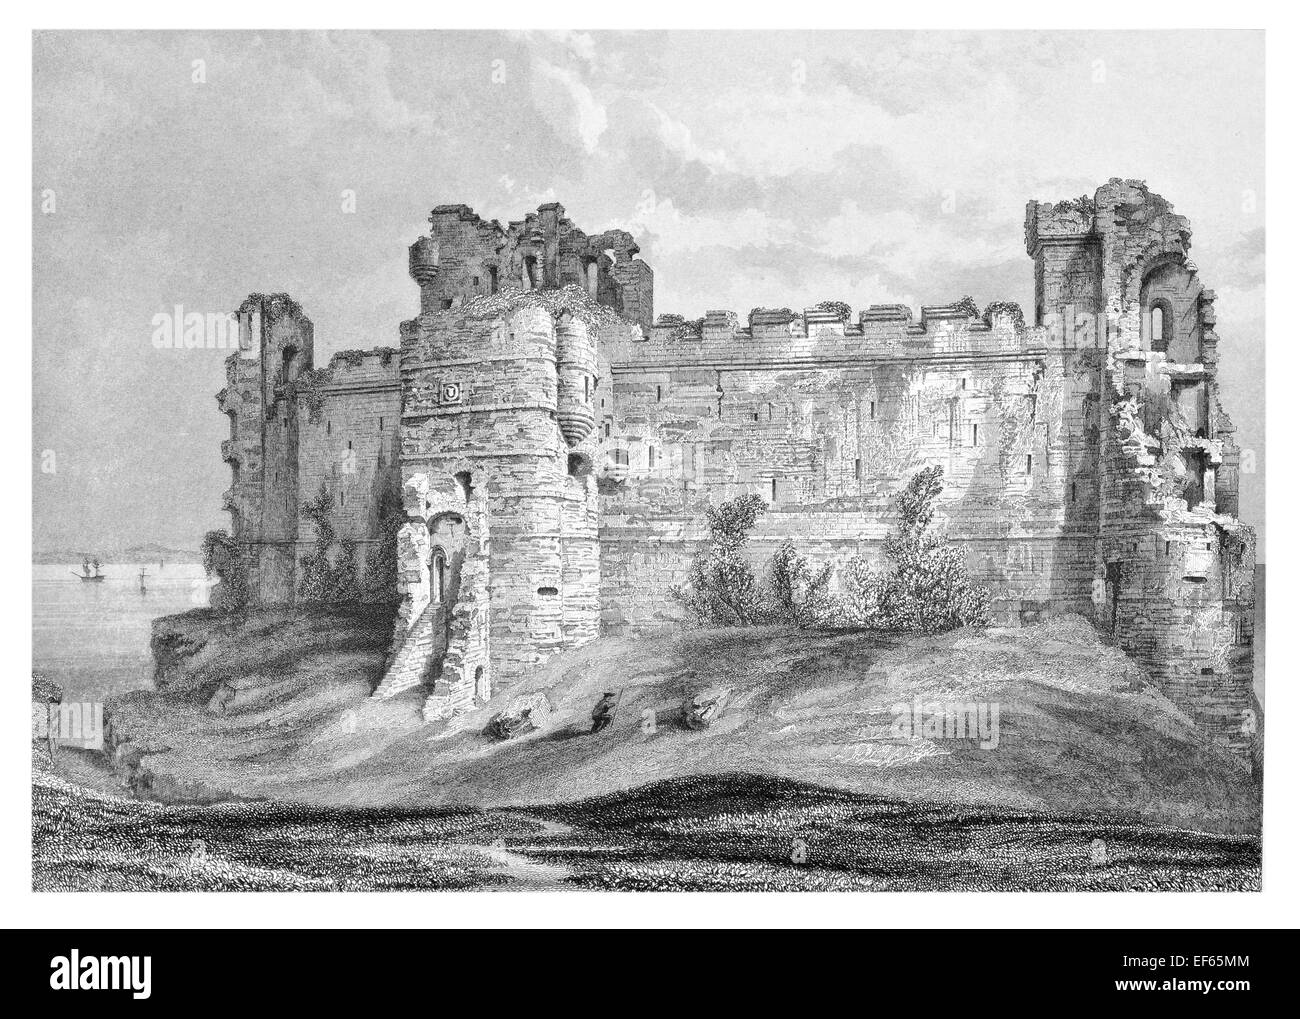 1852 Tantallon mittelalterlichen Vorhang Wand Schloss halb ruiniert Mitte des 14. Jahrhunderts Festung North Berwick, East Lothian Firth of Forth Stockfoto